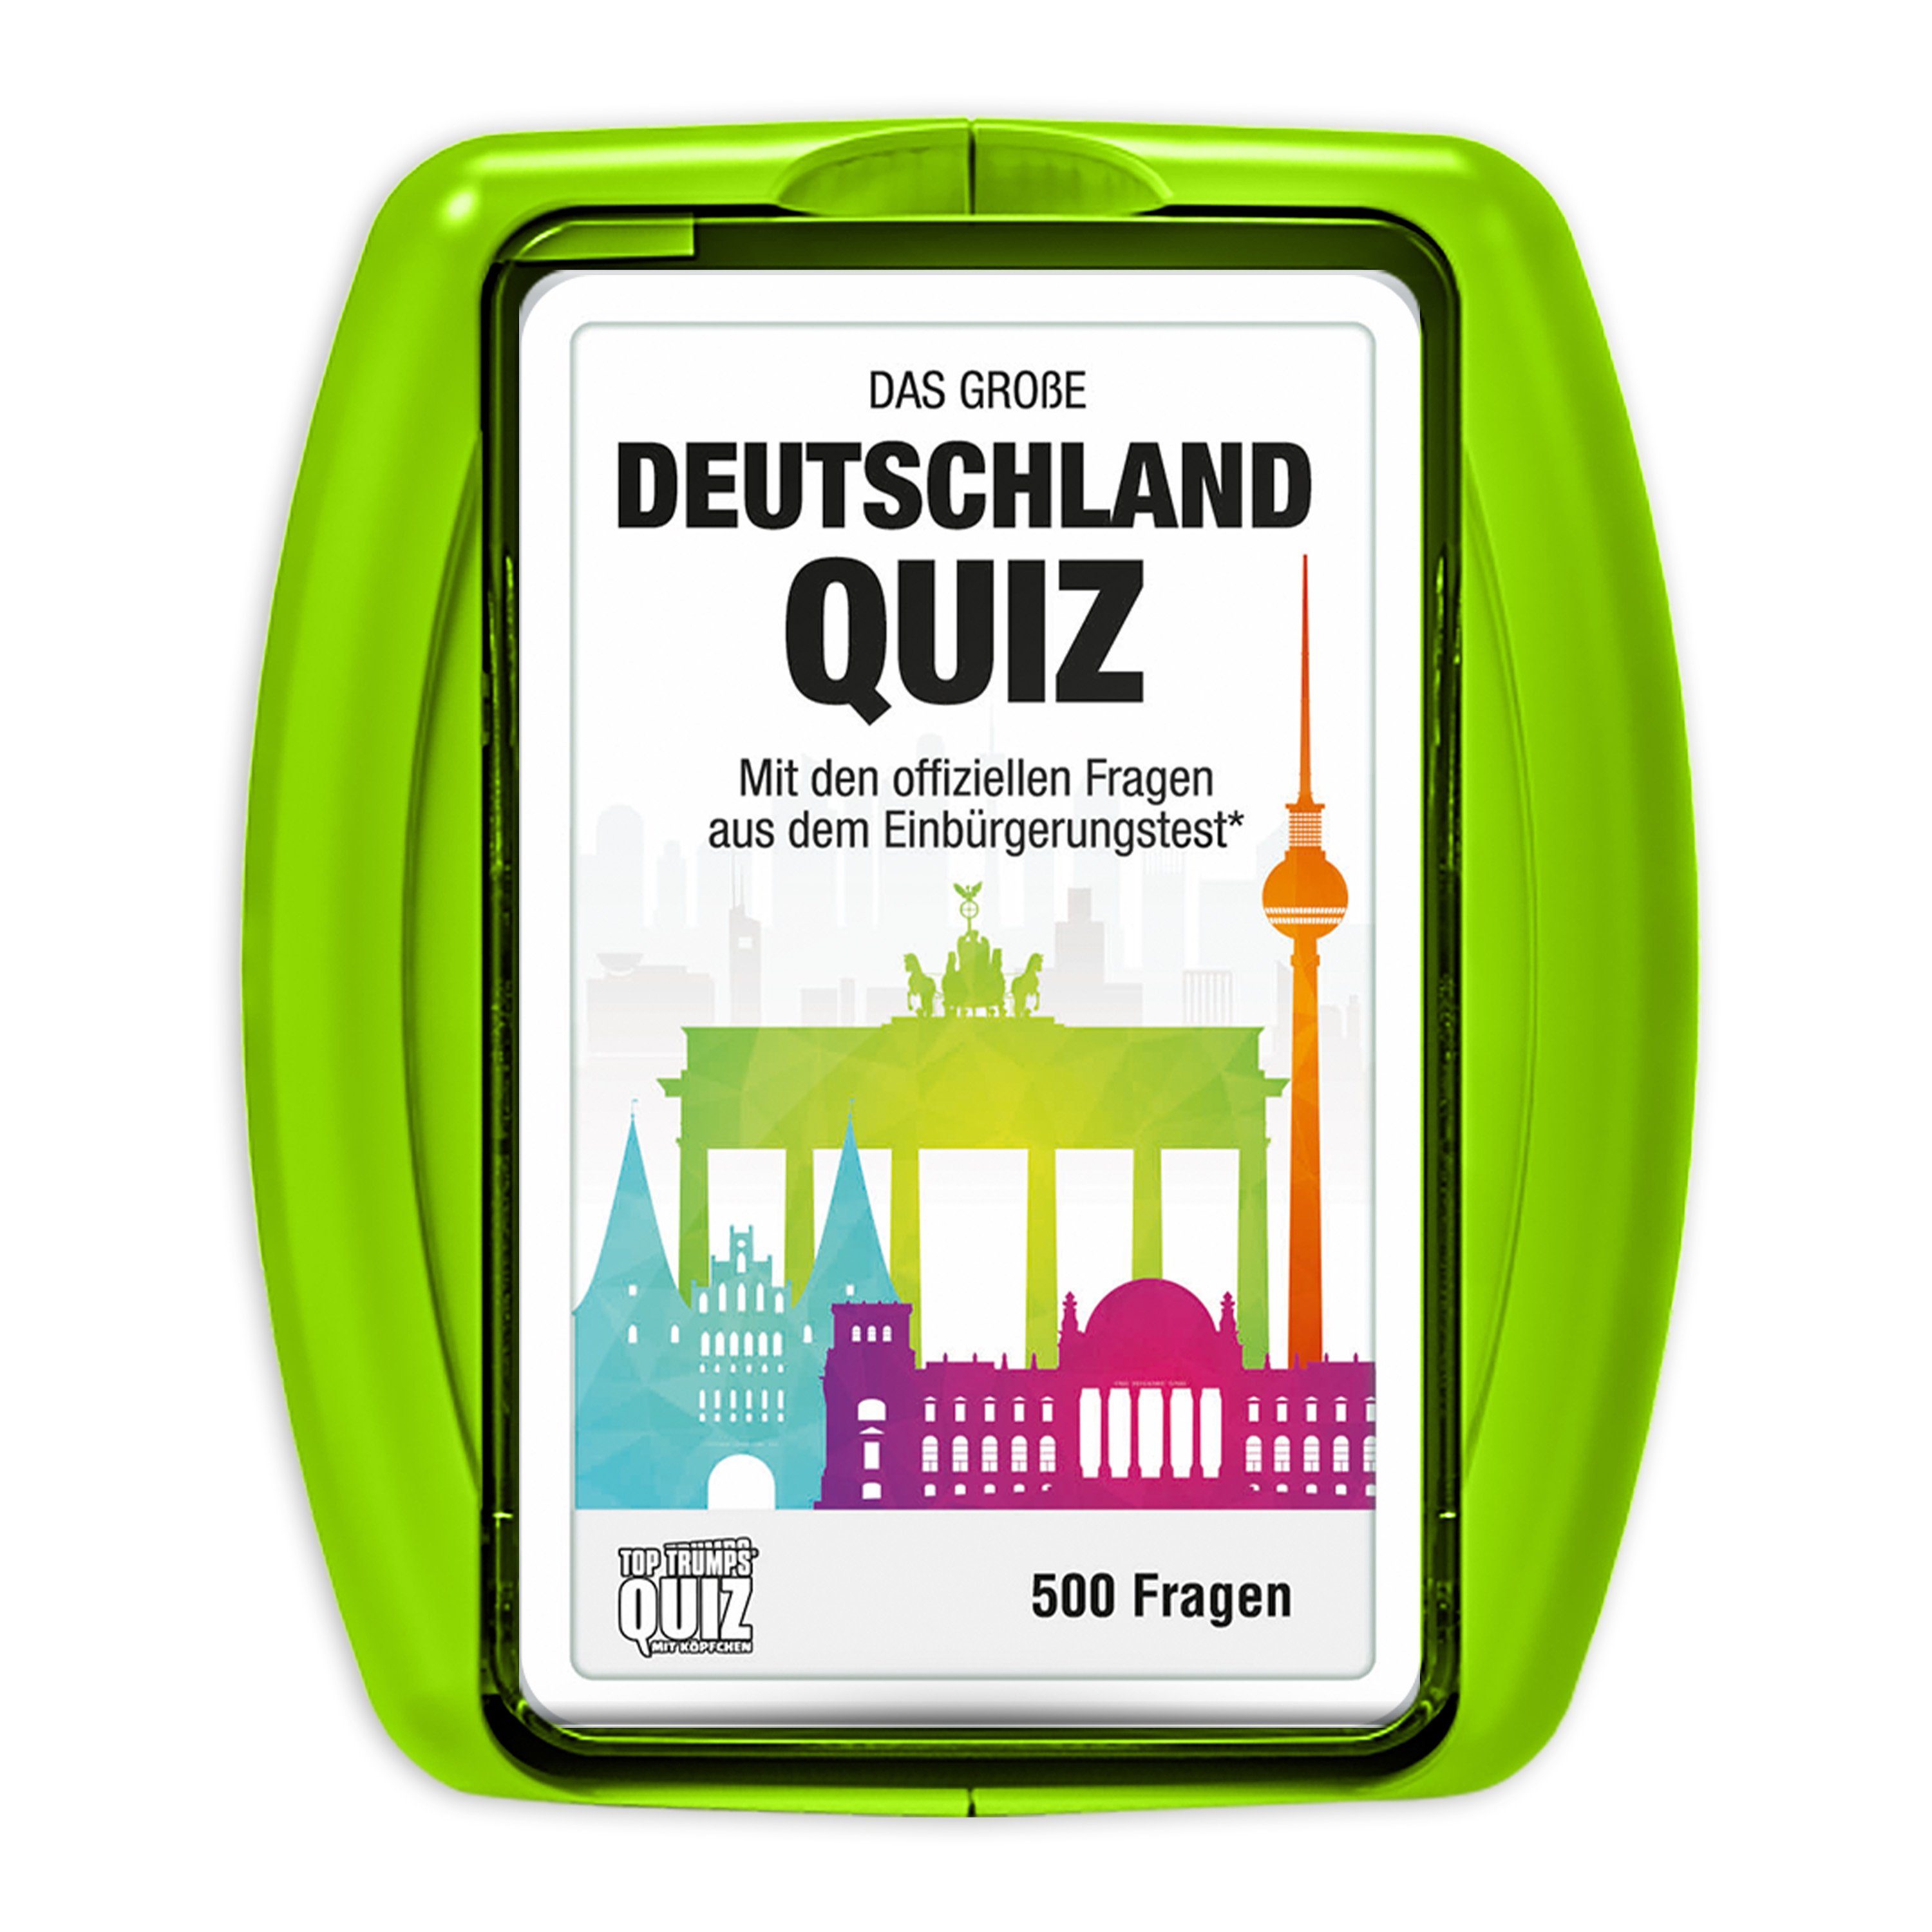 Top Trumps Winning - Deutschland Moves Spiel, Quiz Wissenspiel Quiz